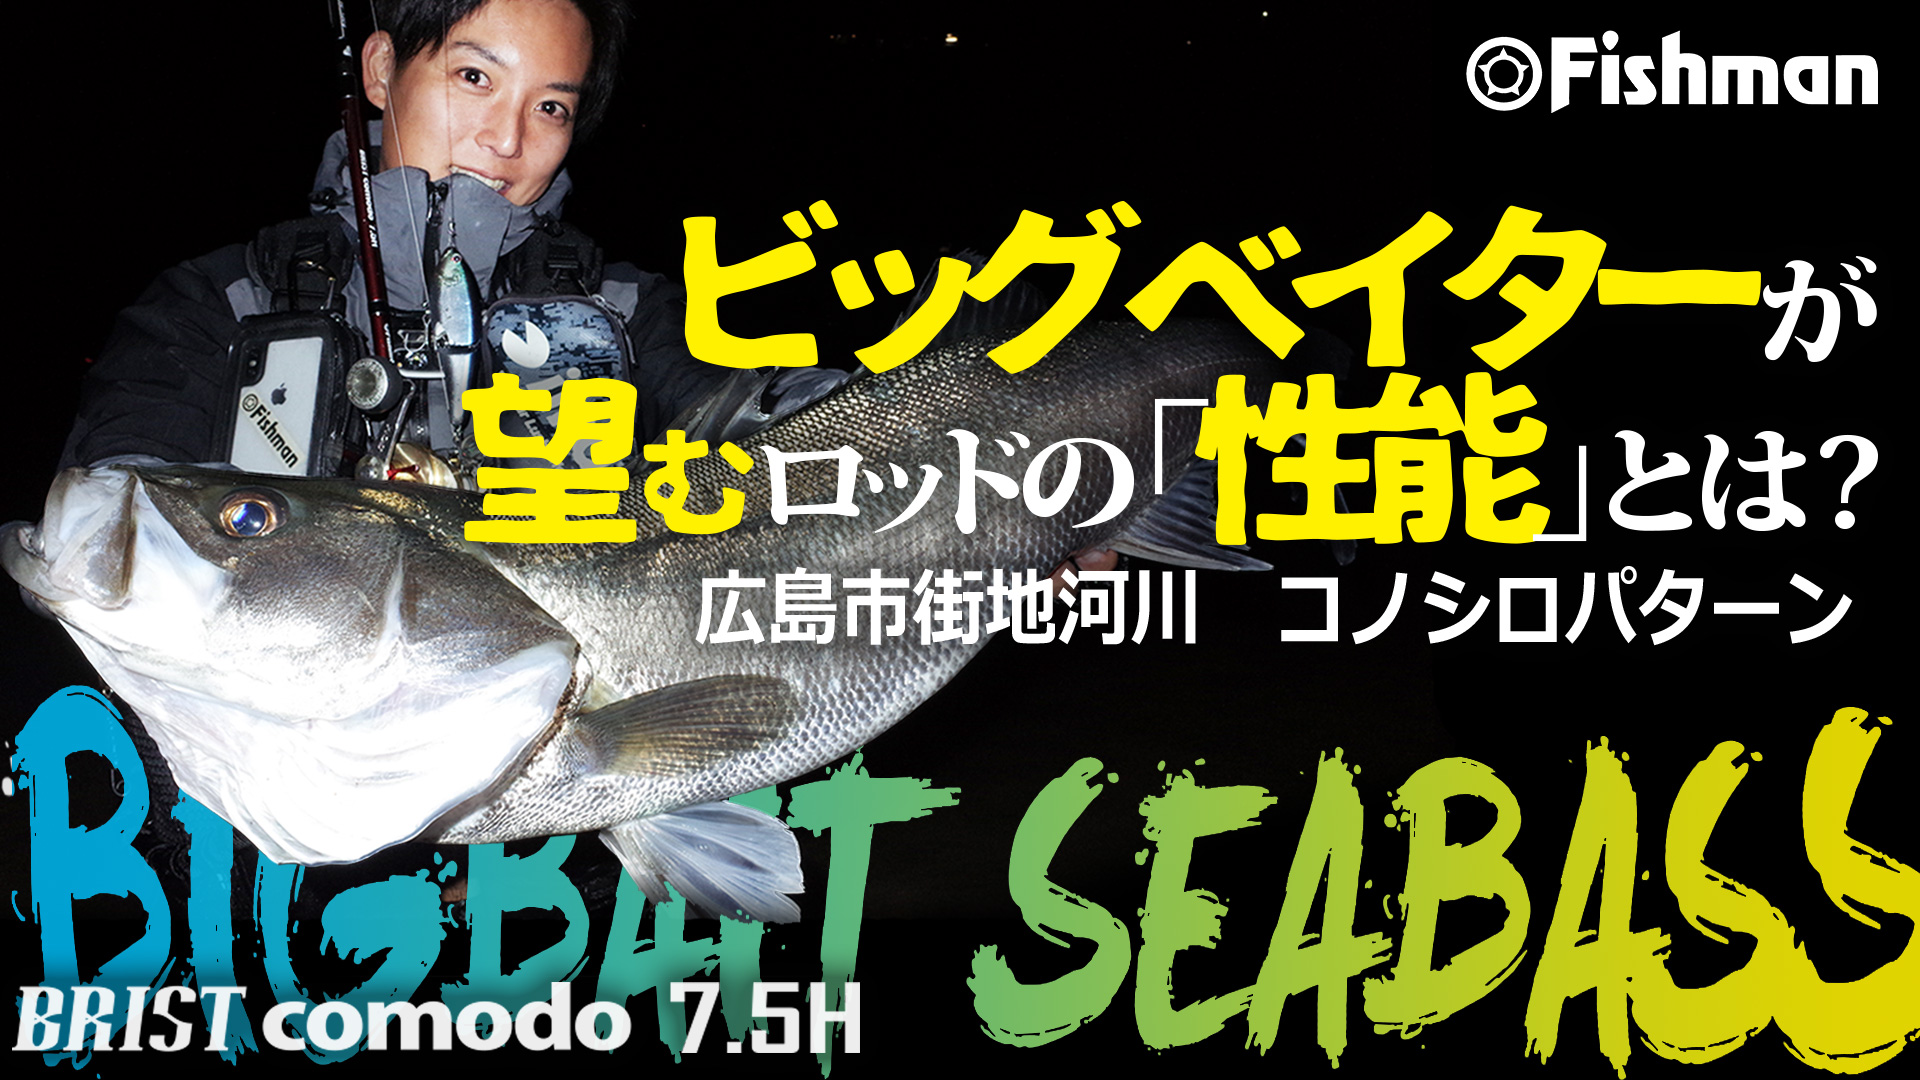 【FishmanTV公開中】広島市街地河川でビッグベイトシーバス